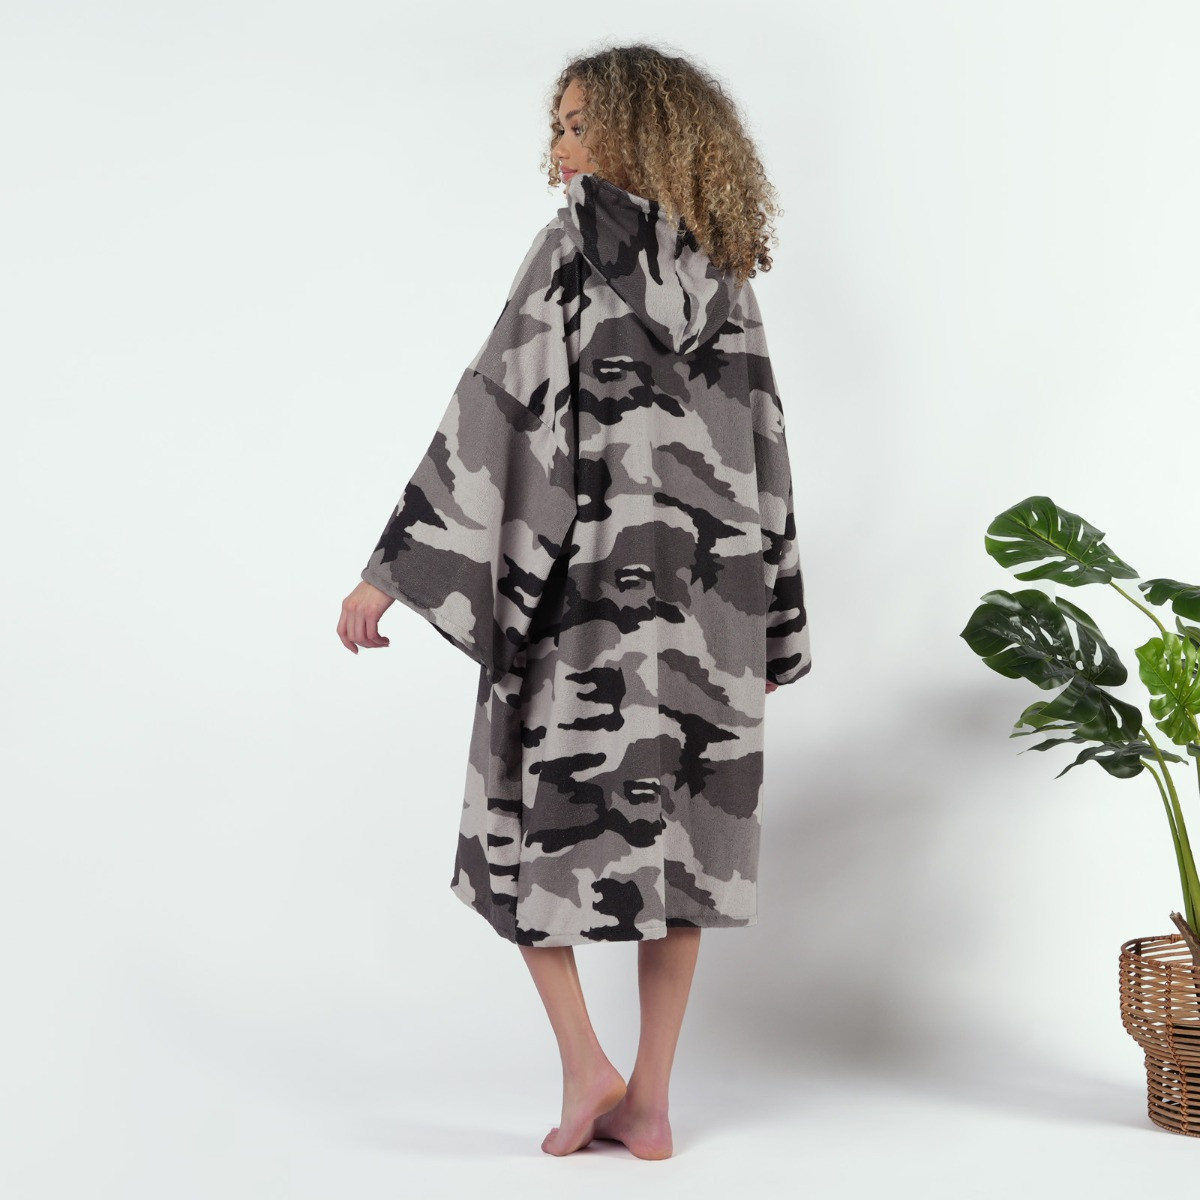 OHS Adult Towel Poncho Camo Print - Charcoal Grey>